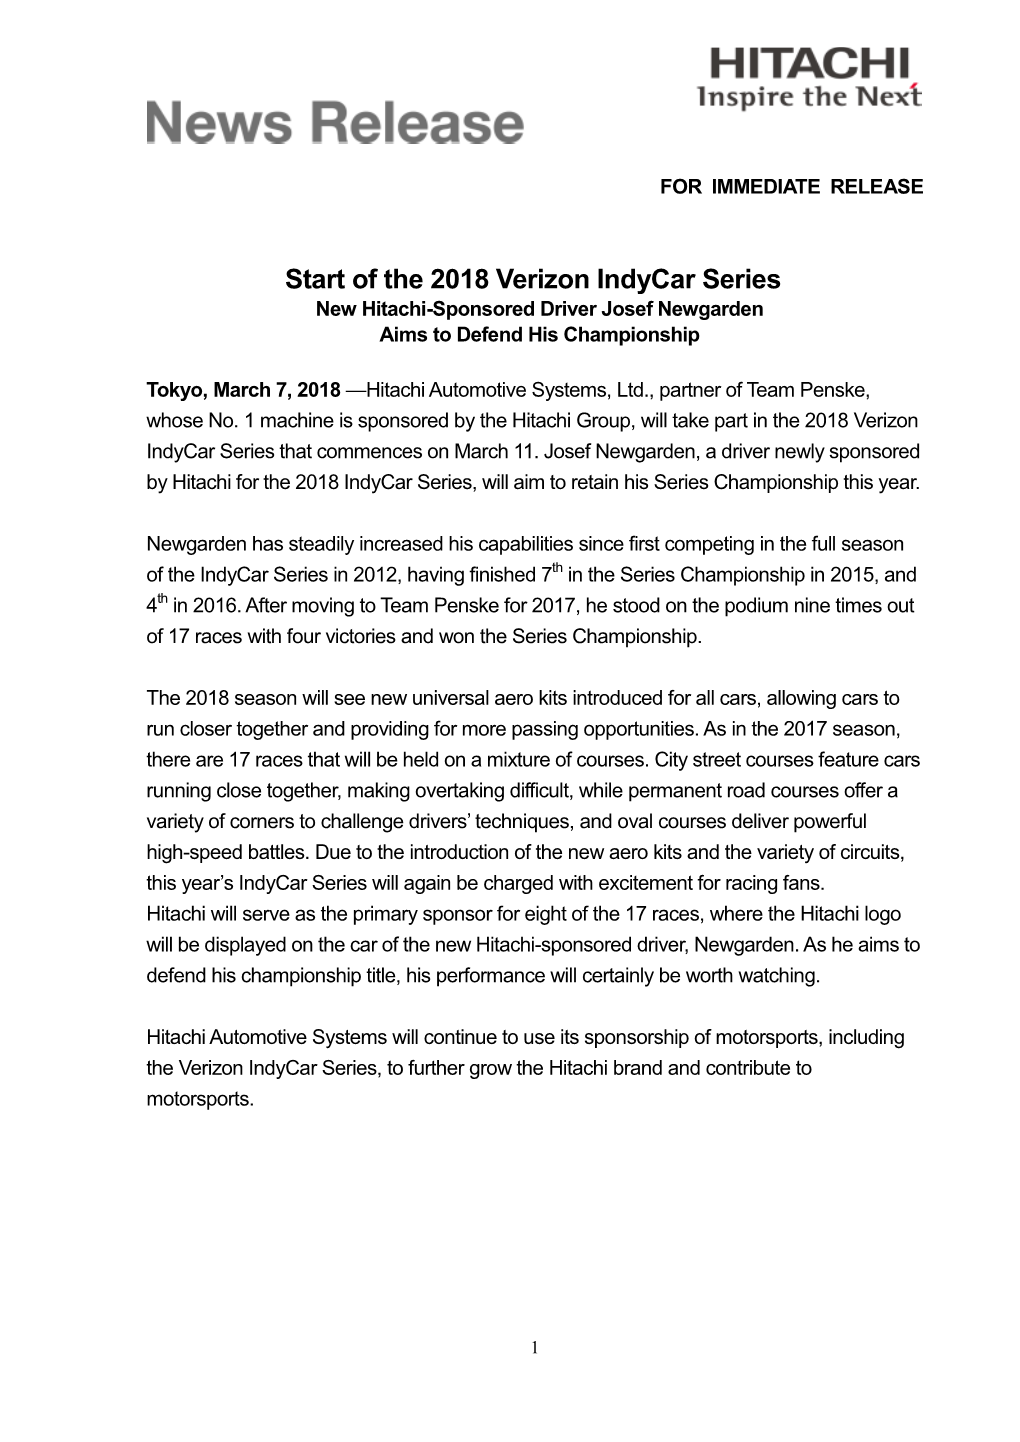 Start of the 2018 Verizon Indycar Series New Hitachi-Sponsored Driver Josef Newgarden Aims to Defend His Championship